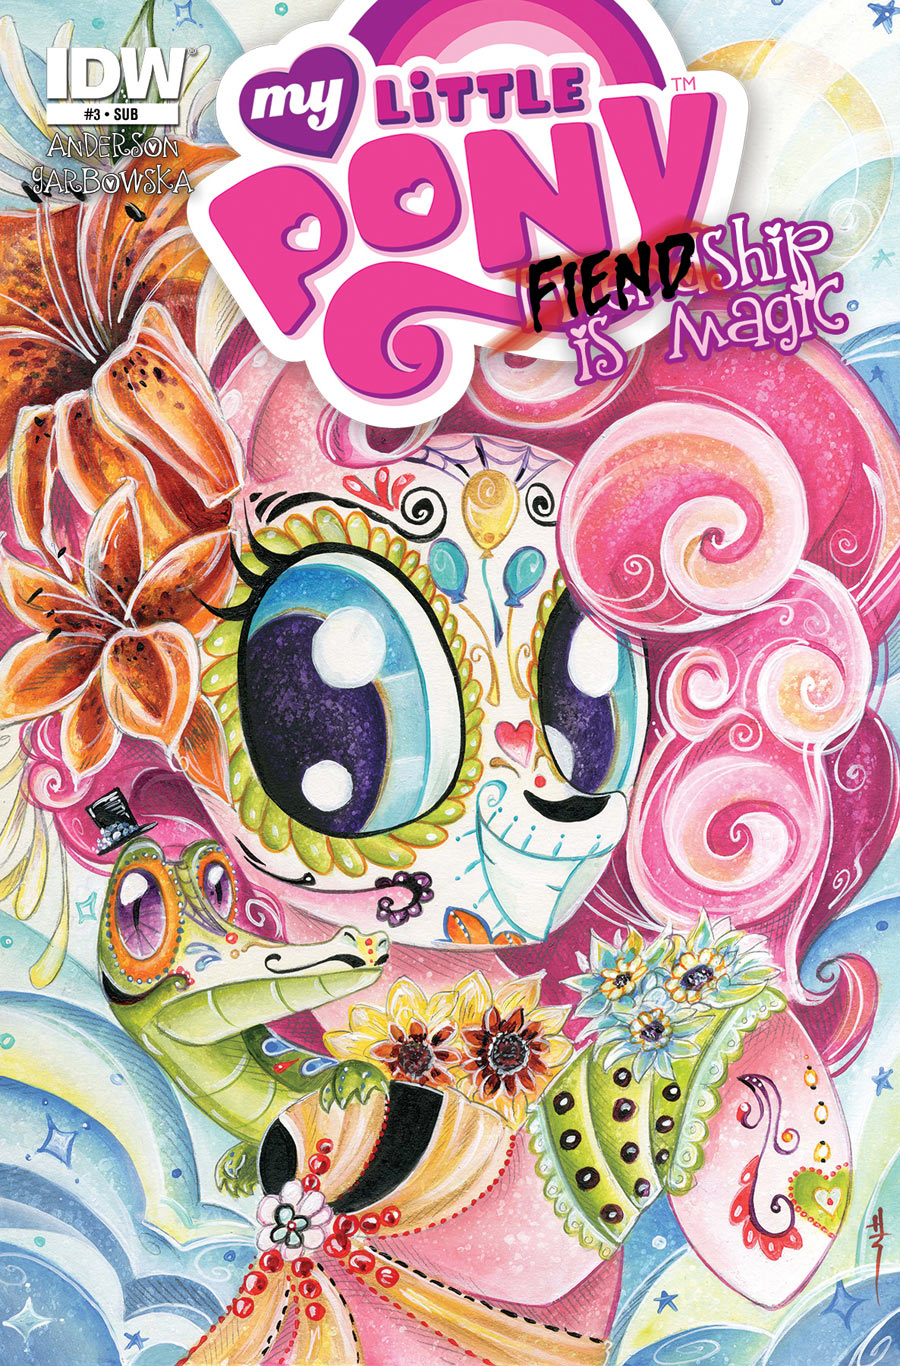 My Little Pony: FIENDship is Magic #3: Sirens